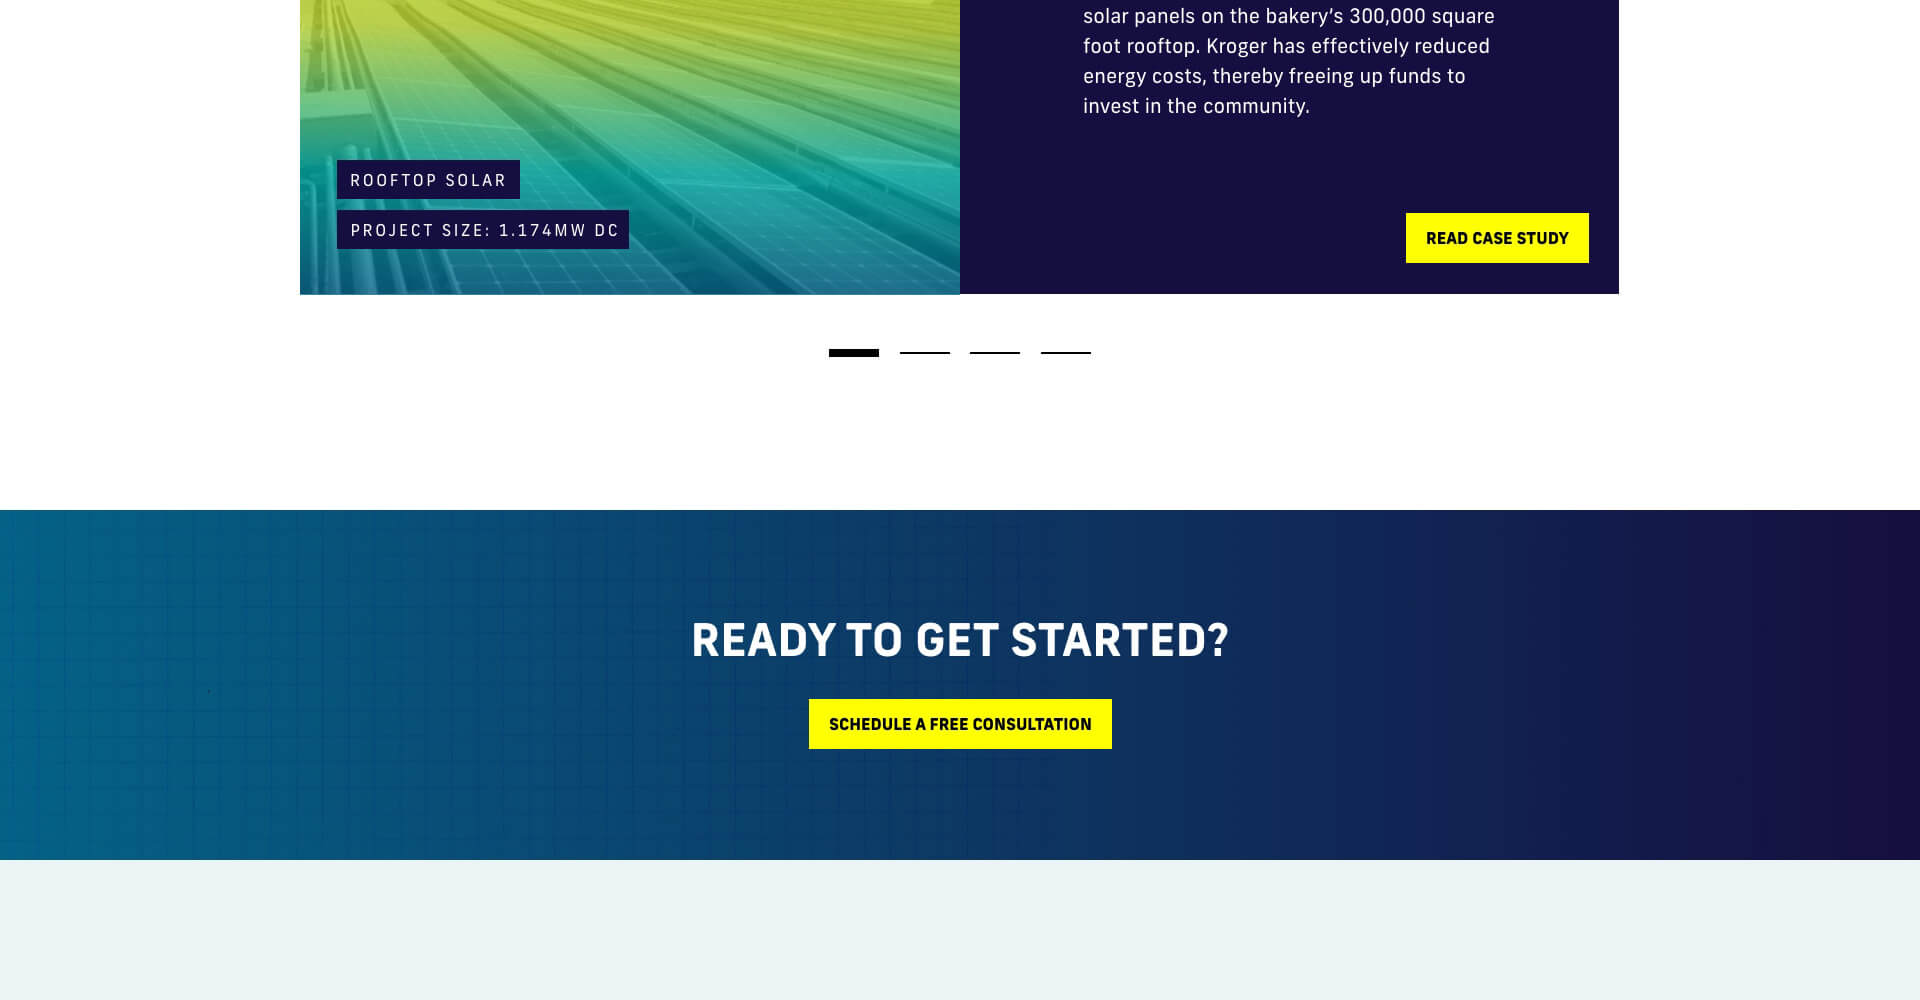 Homepage screenshot of REC Solar